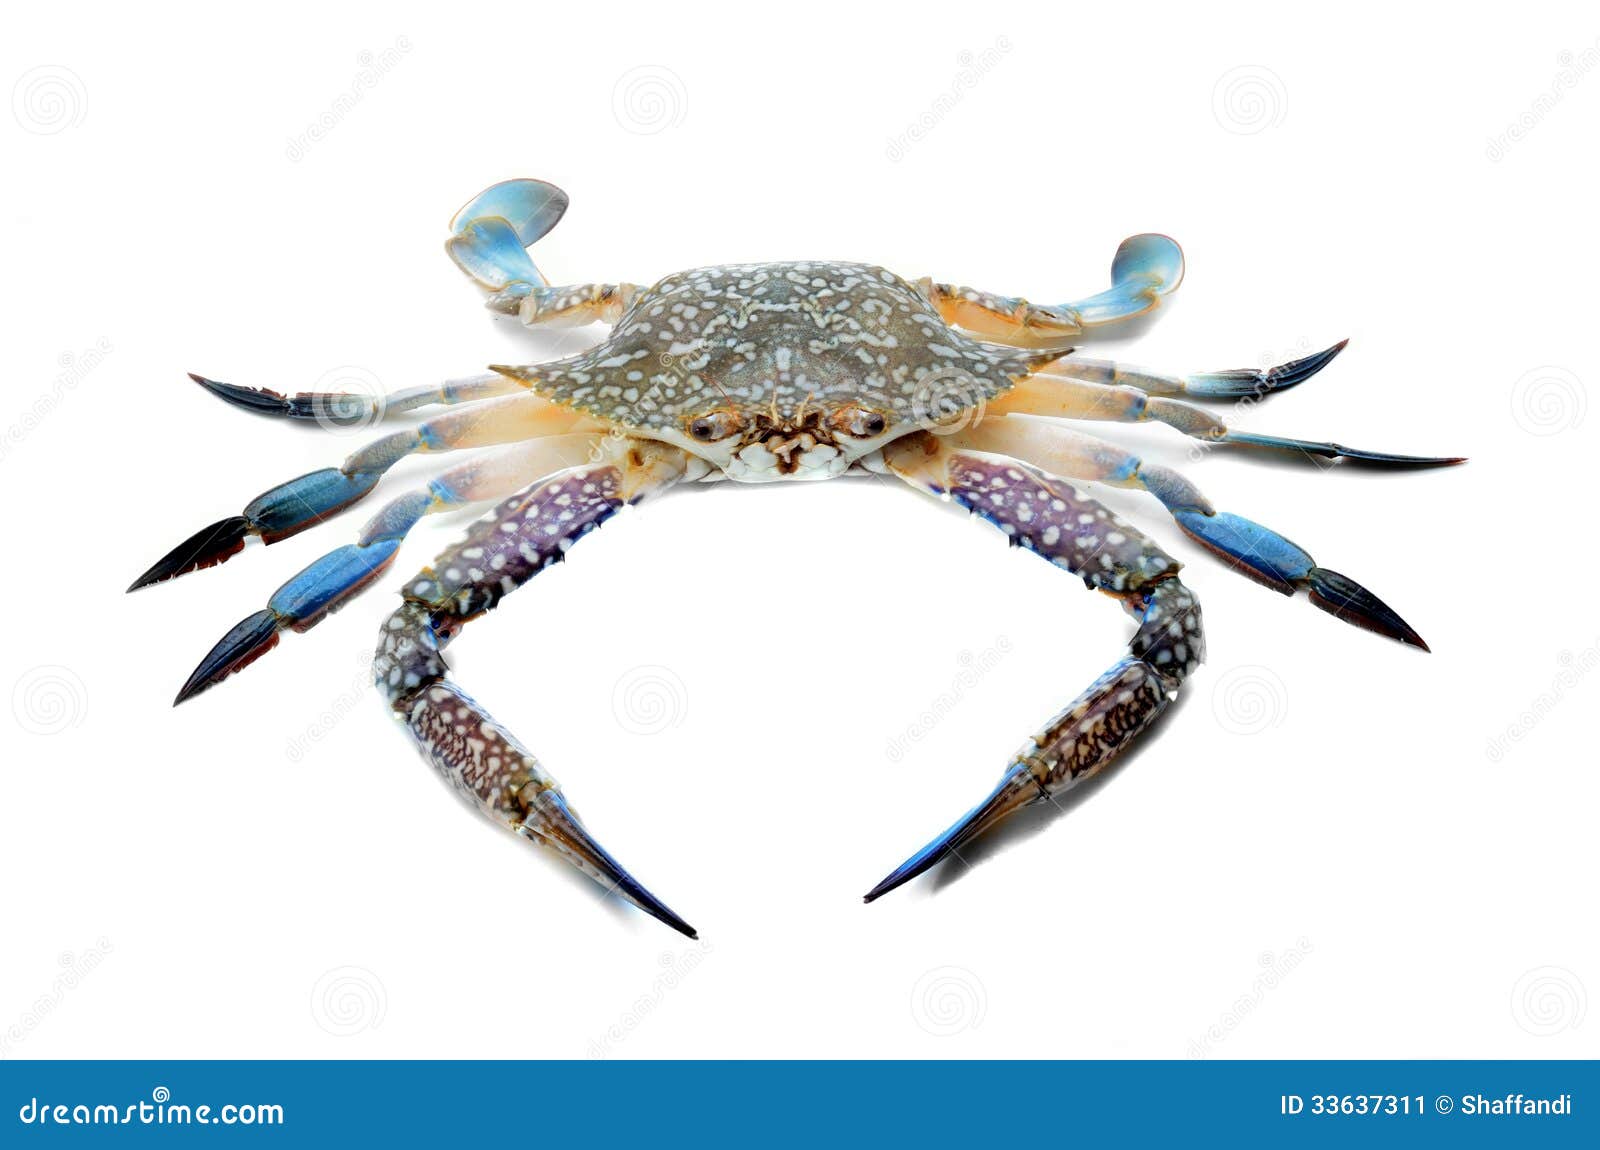 Blue Crab Stock Image - Image: 33637311